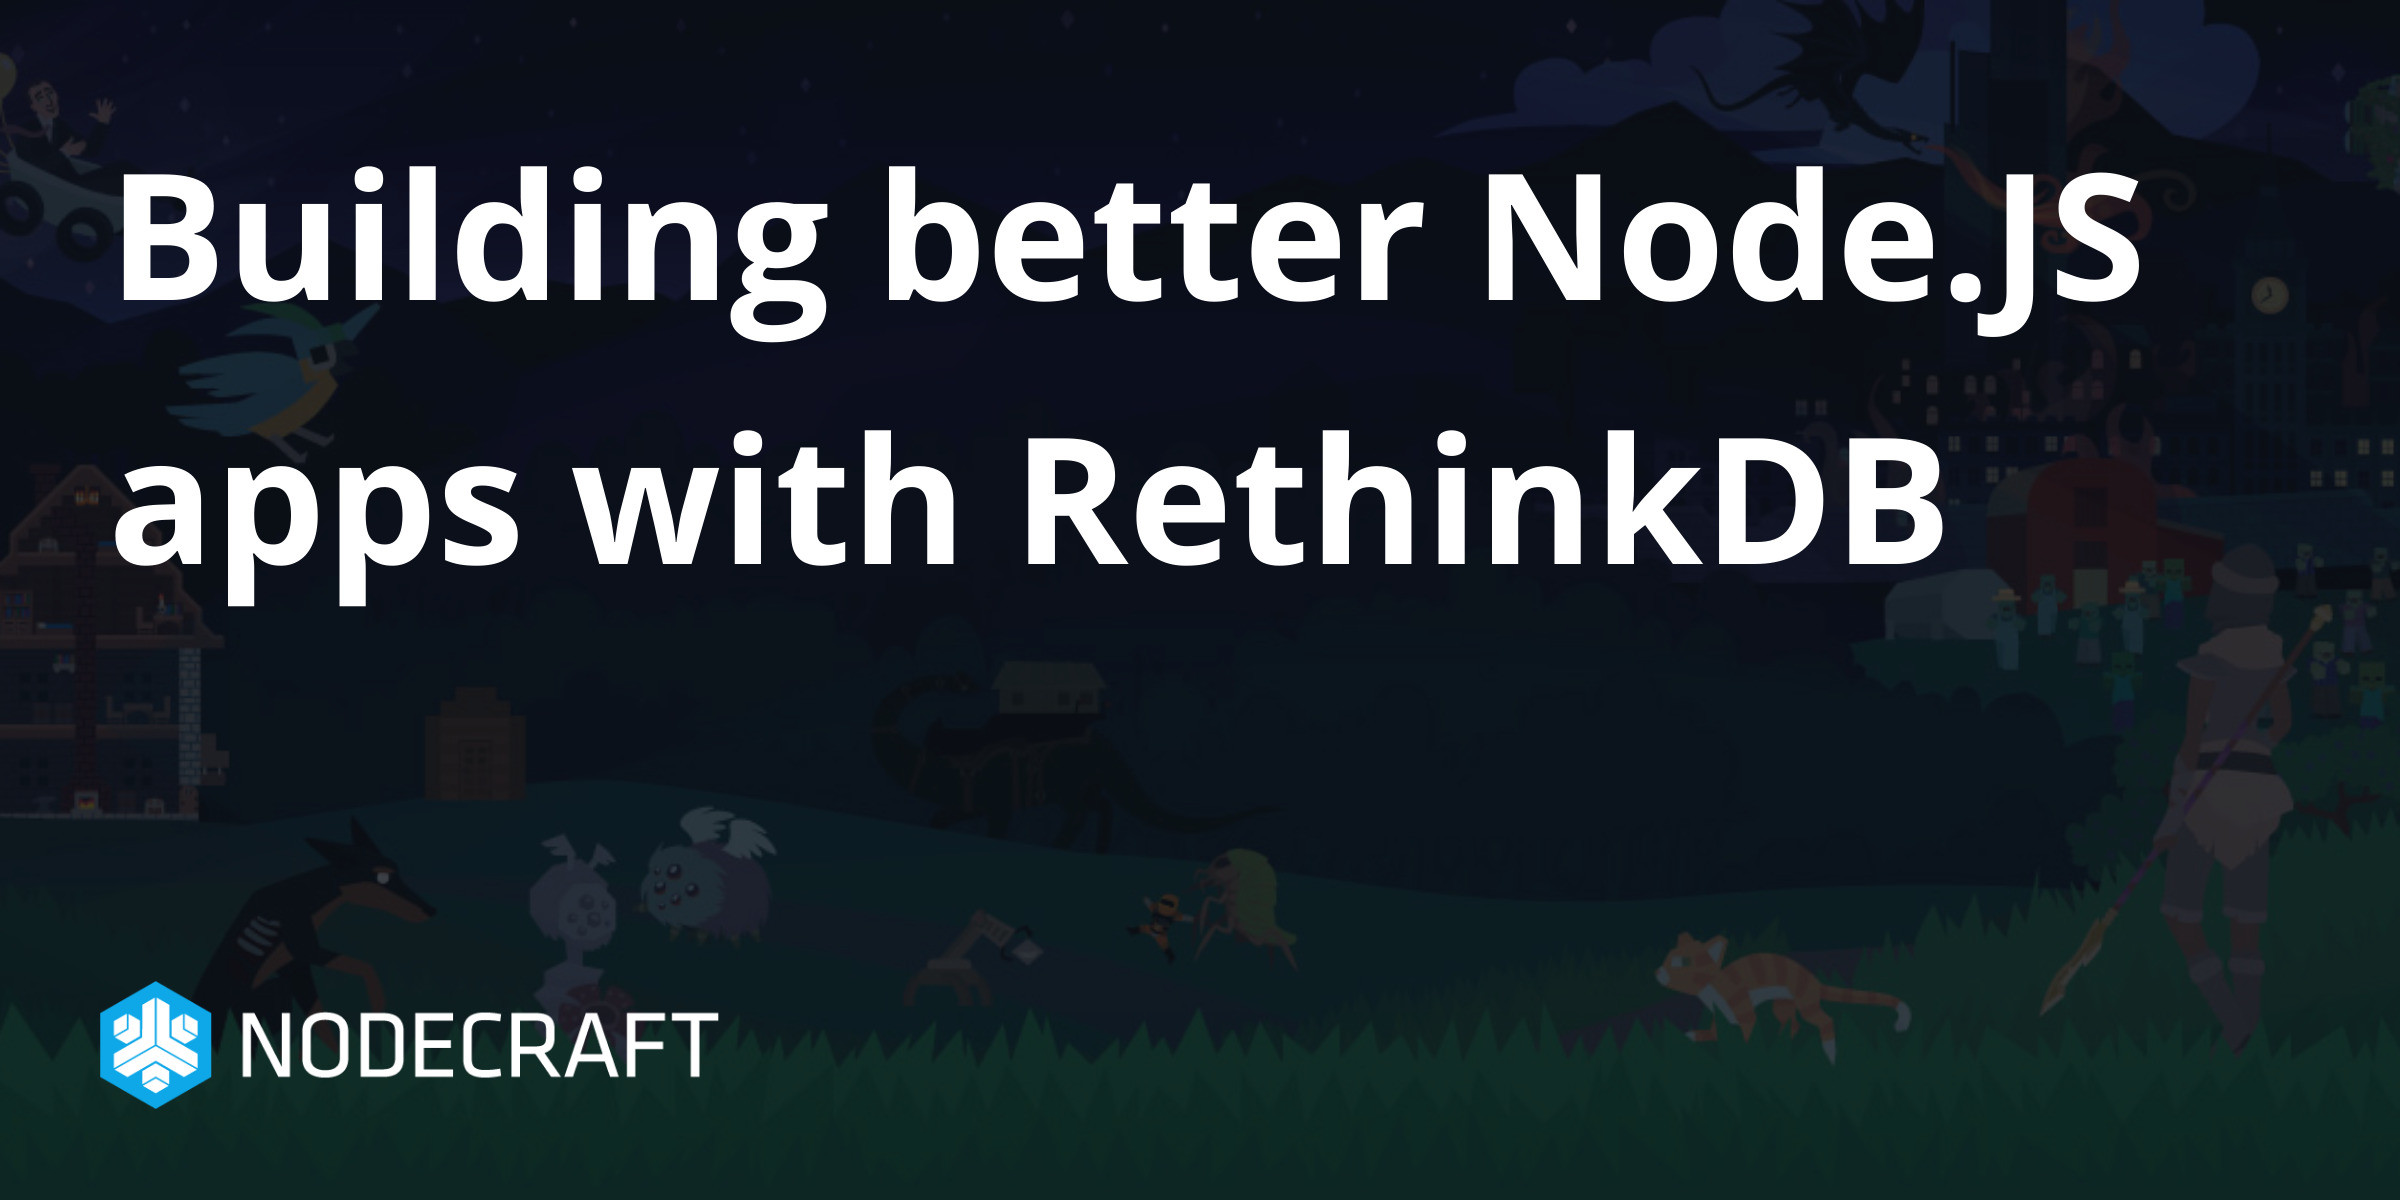 Building better Node.JS apps with RethinkDB